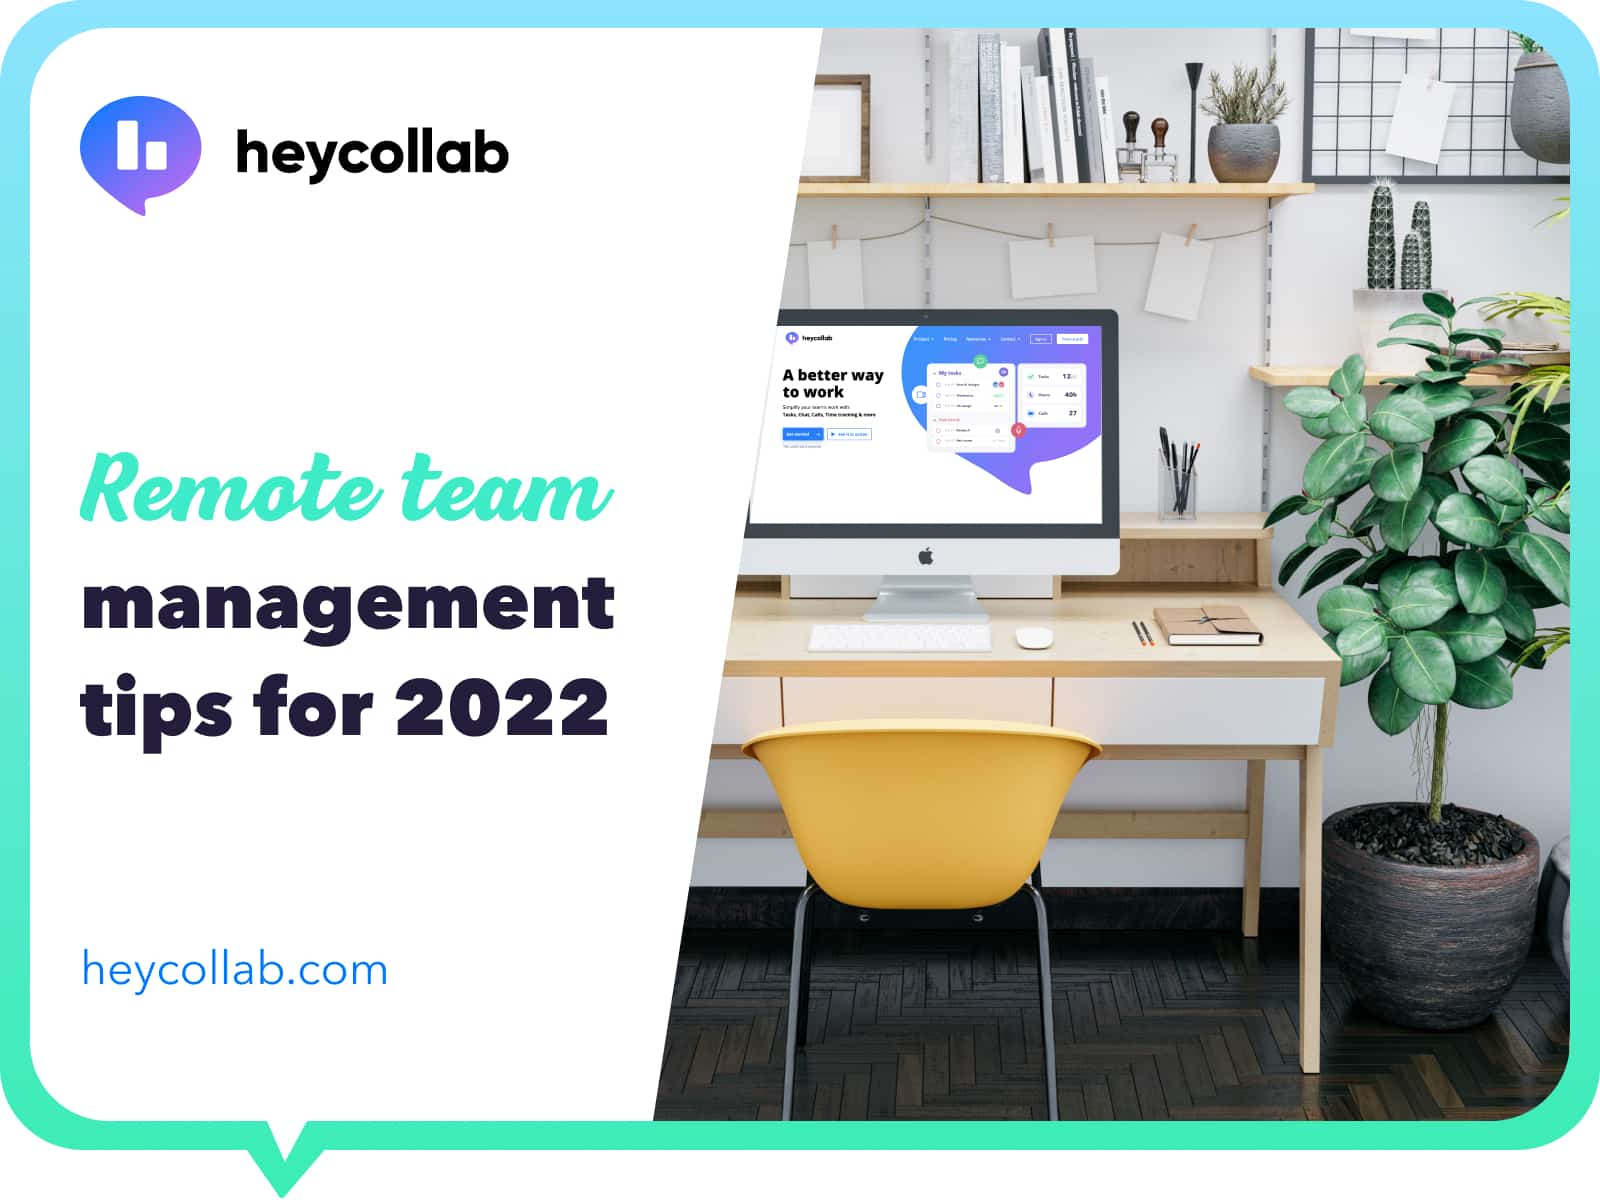 Heycollab remote team management